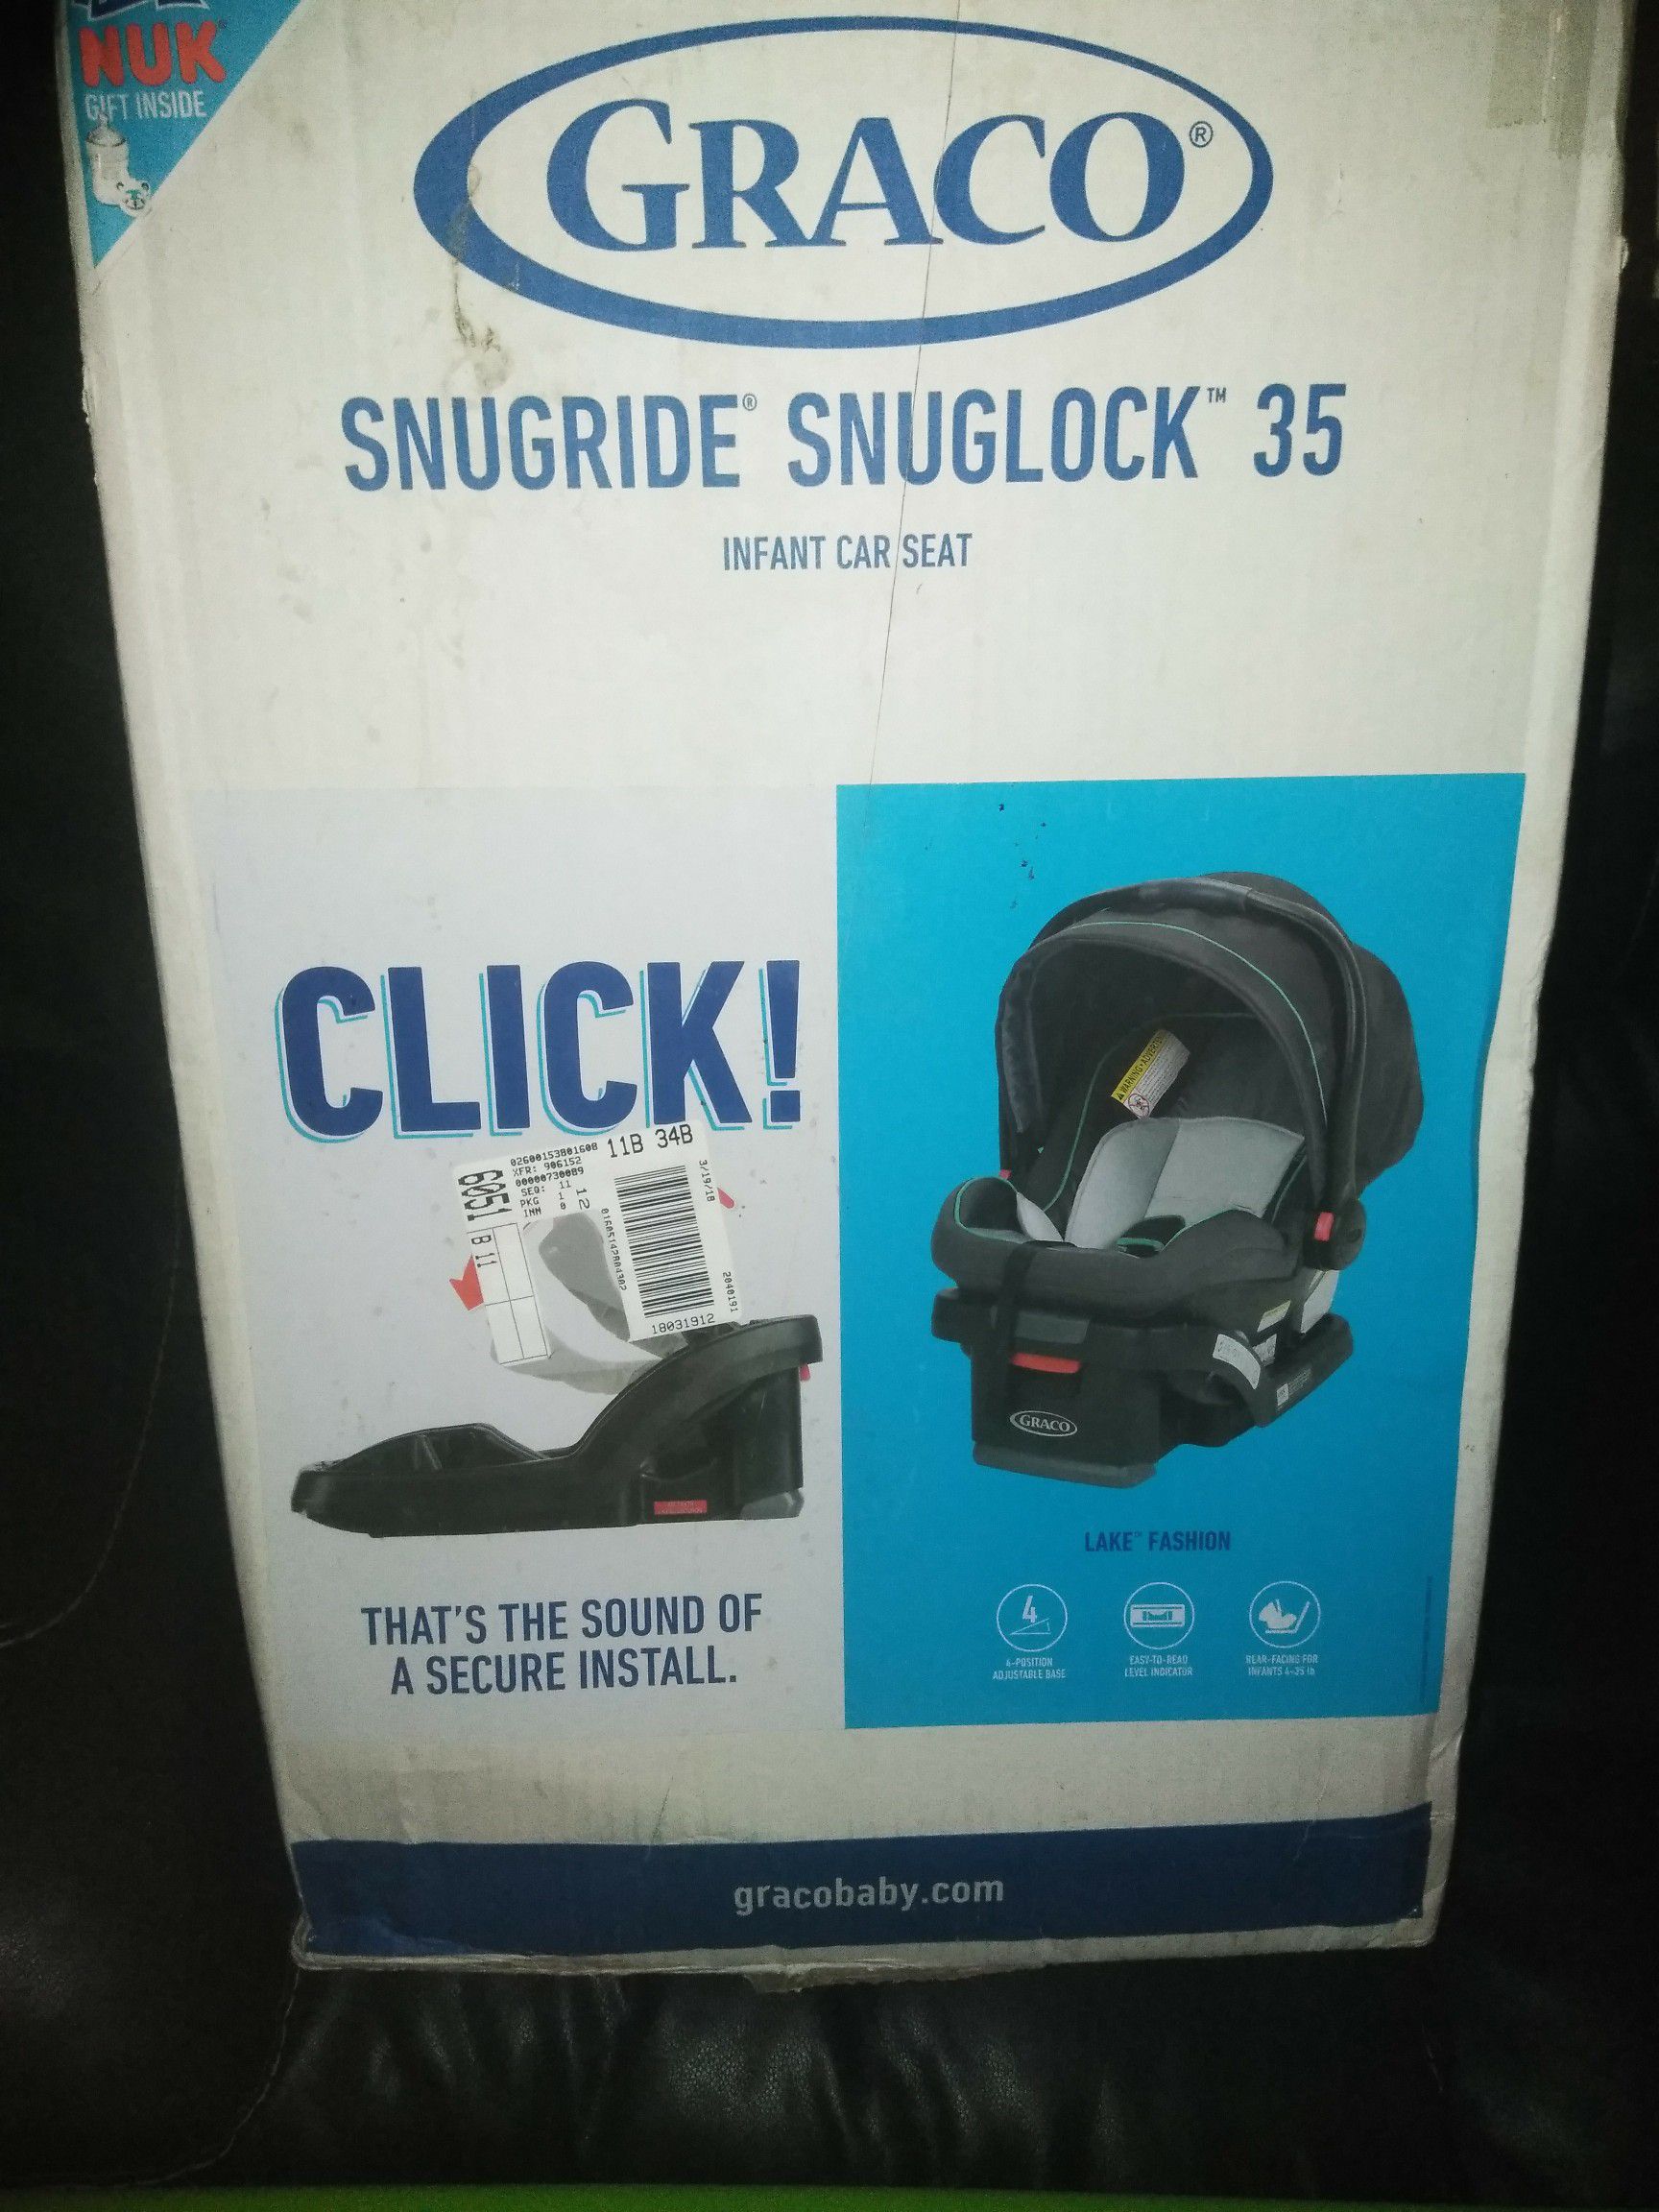 Graco snugride and snuglock 35 infant car seat